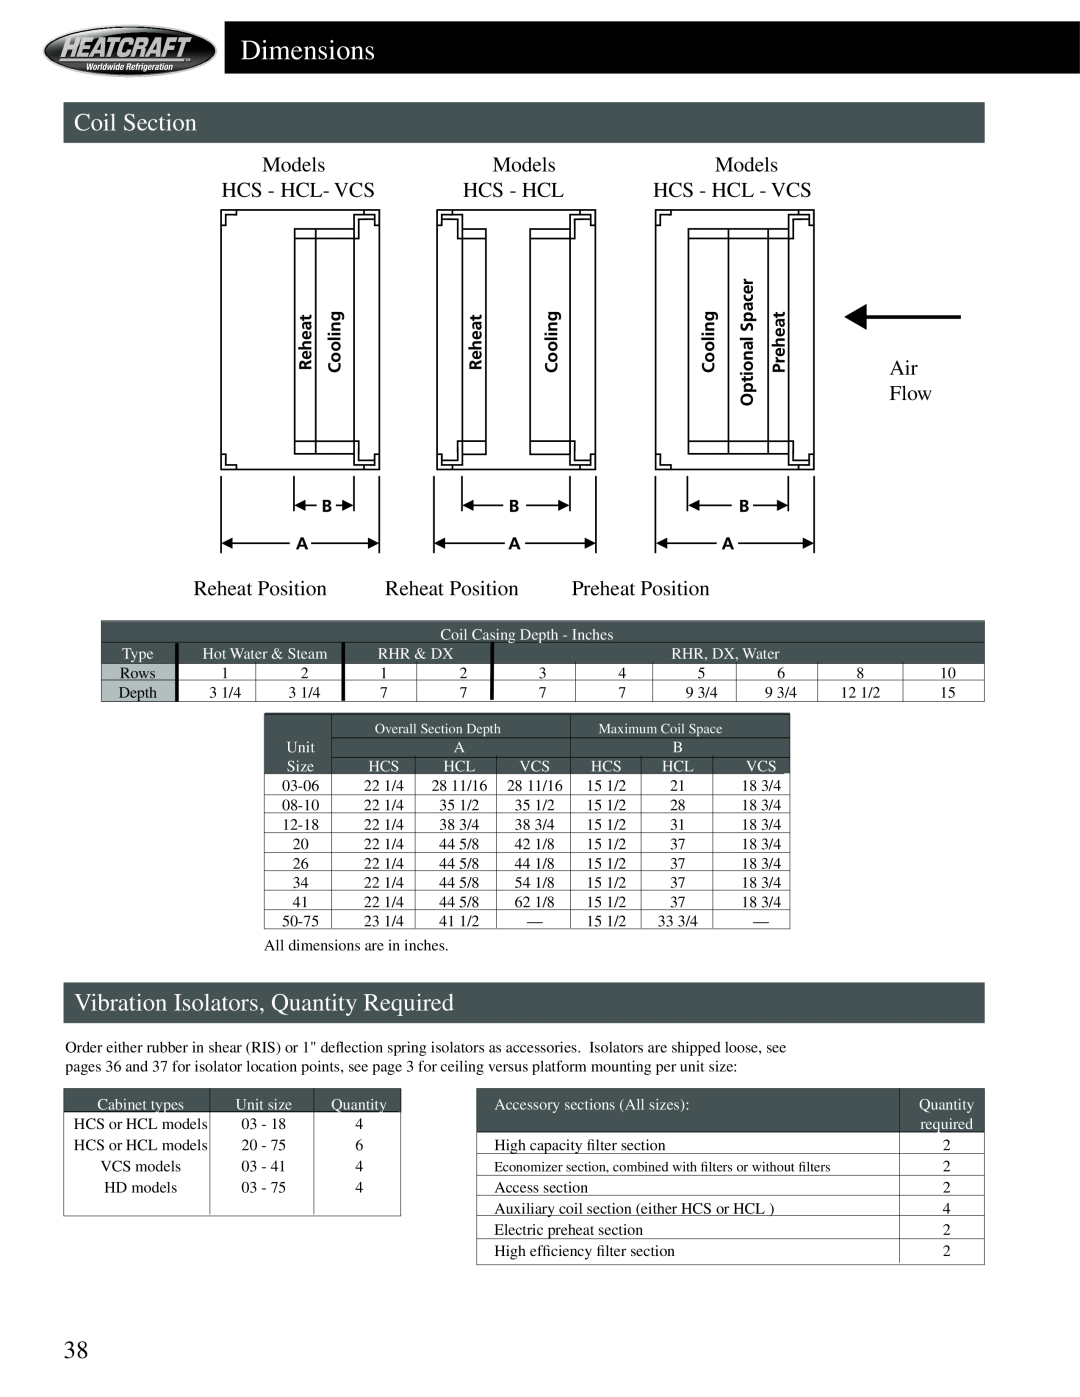 Heatcraft Refrigeration Products HCS manual Coil Section, Vibration Isolators, Quantity Required, Models, Hcs - Hcl- Vcs 